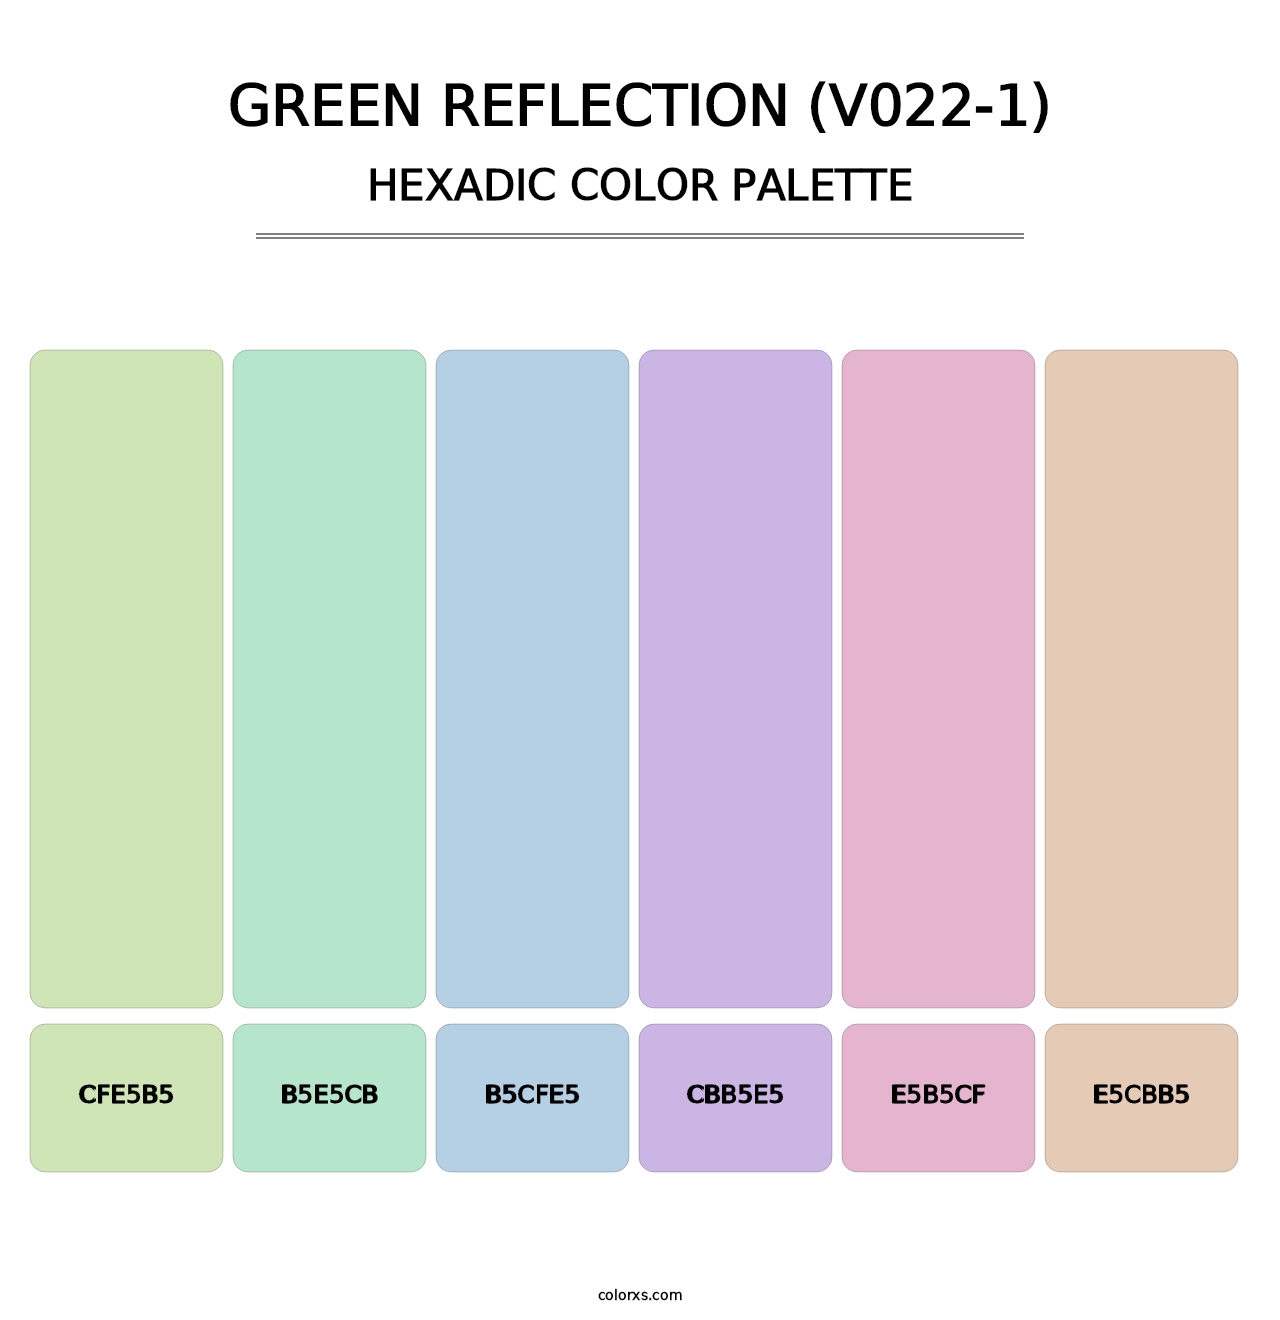 Green Reflection (V022-1) - Hexadic Color Palette